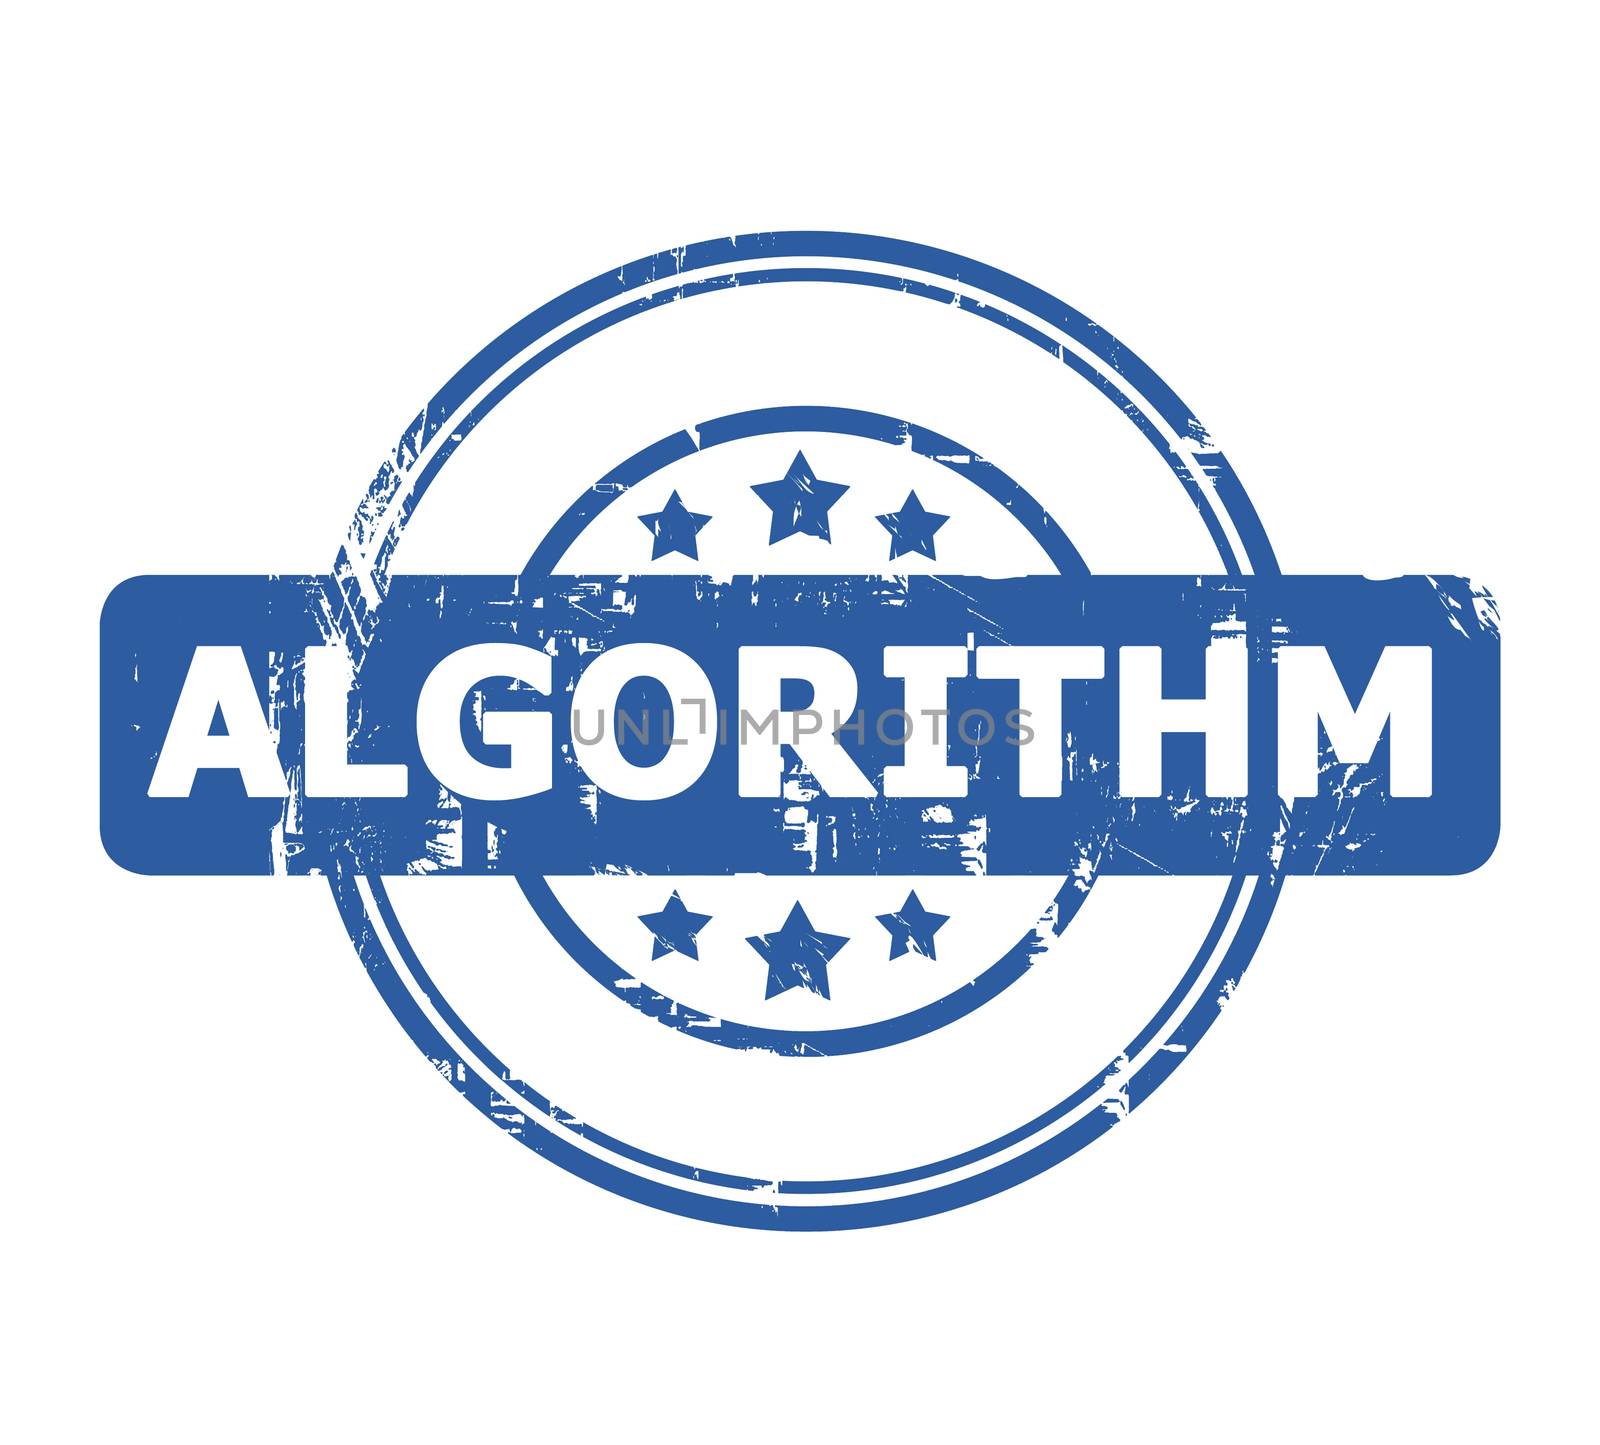 Algorithm stamp by speedfighter